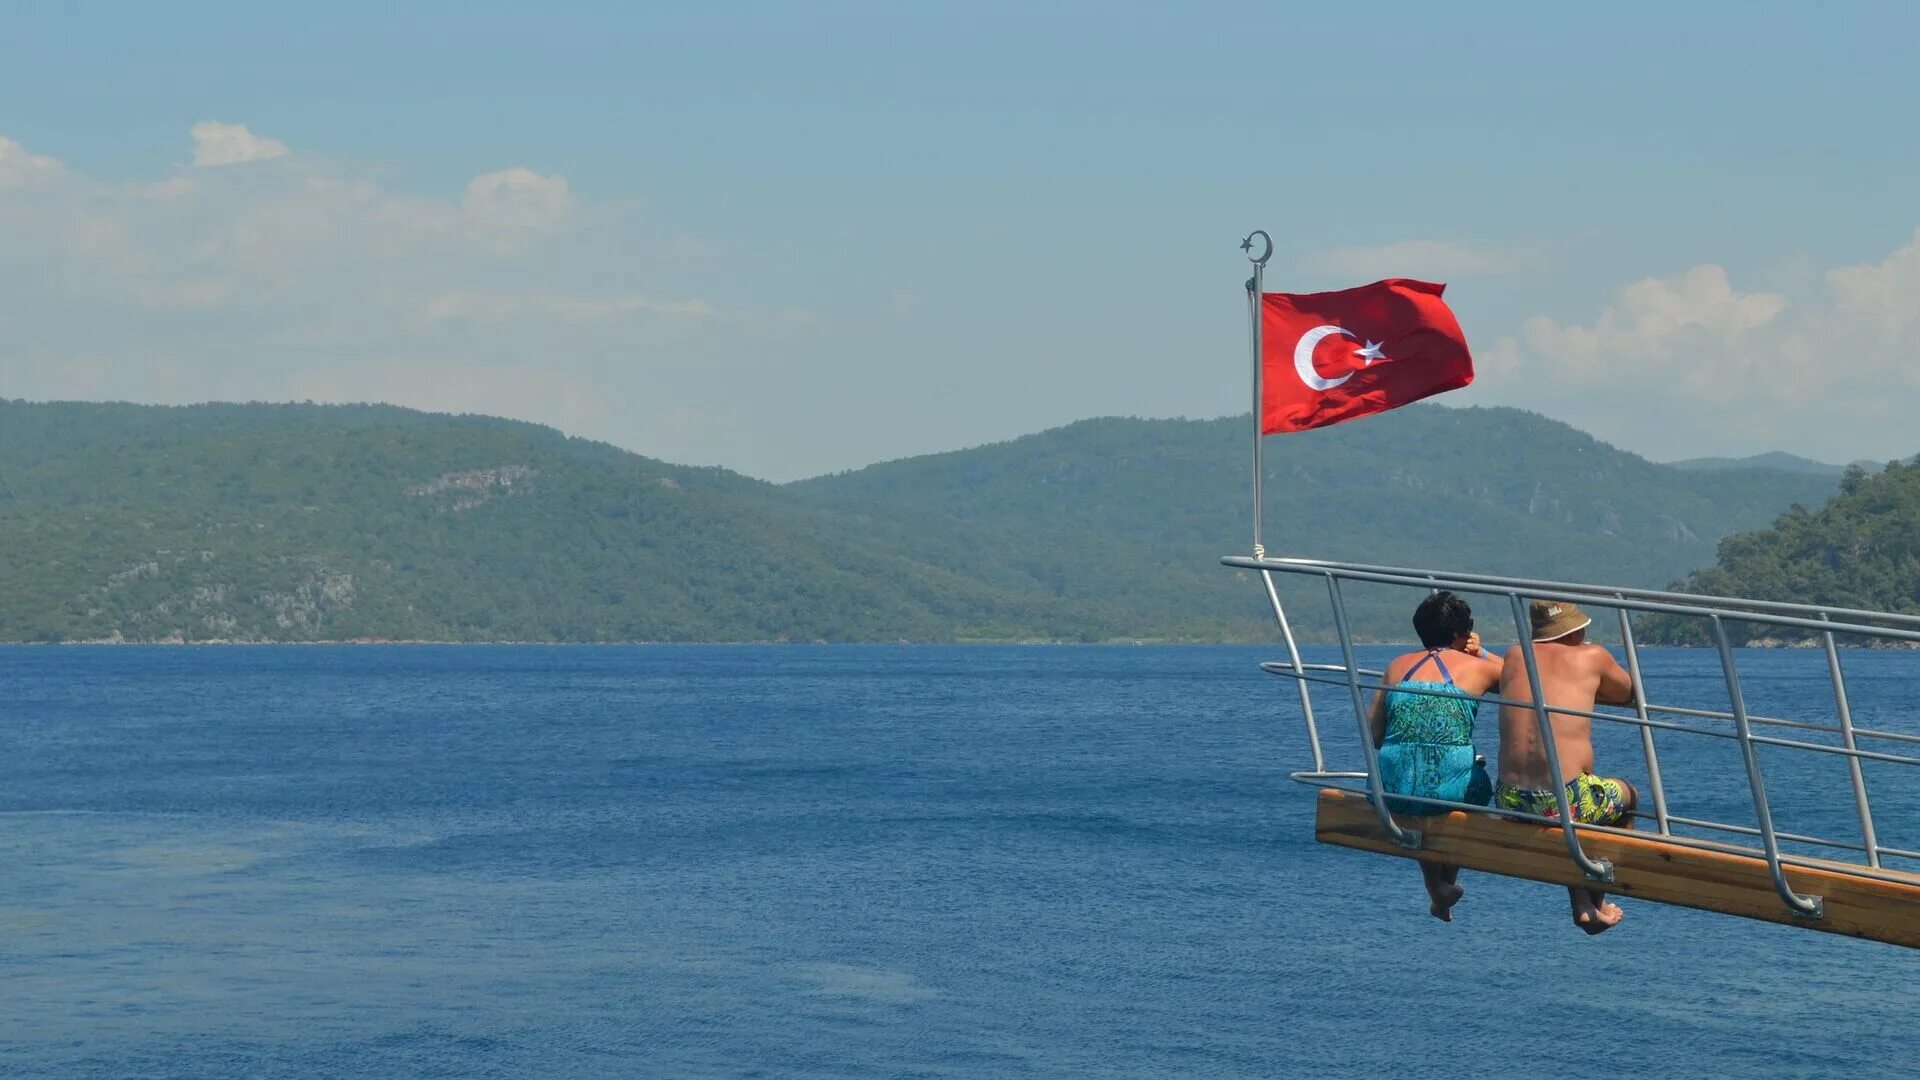 Туристы в Турции. Турция туризм. Турция путешественник.